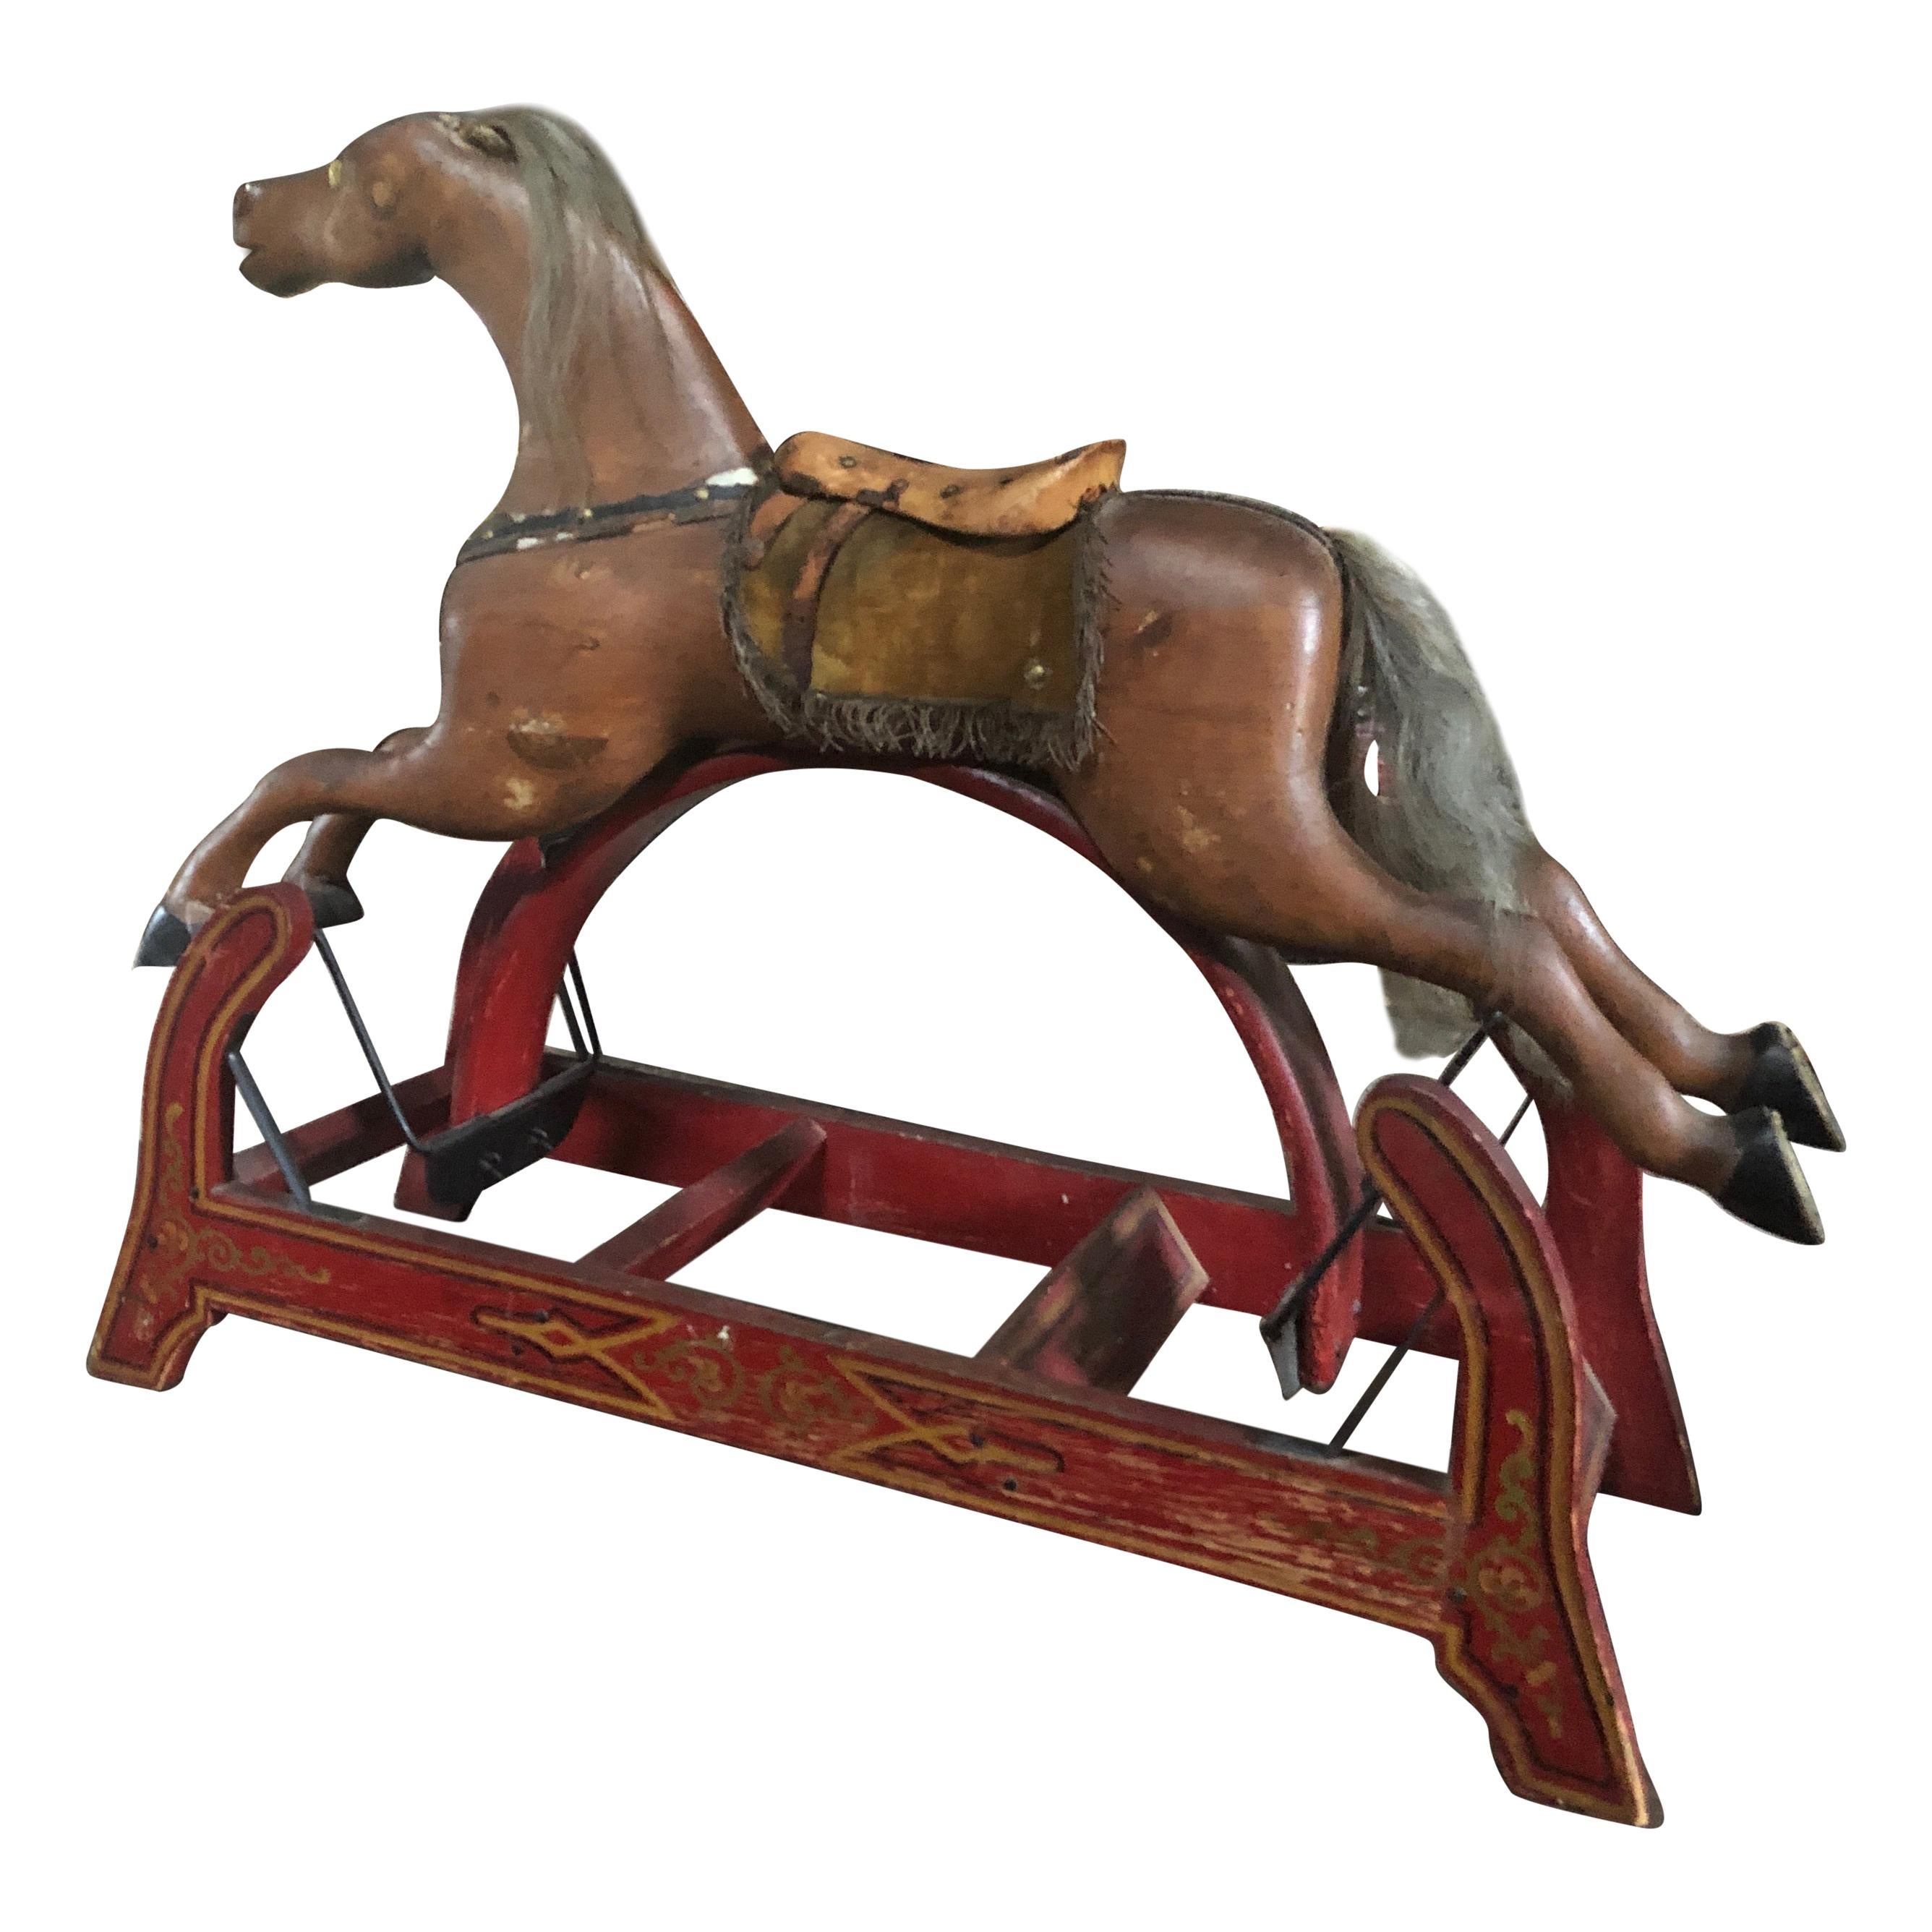 Enchanting Folk Art 19th Century Children's Hobby Horse Toy Sculpture